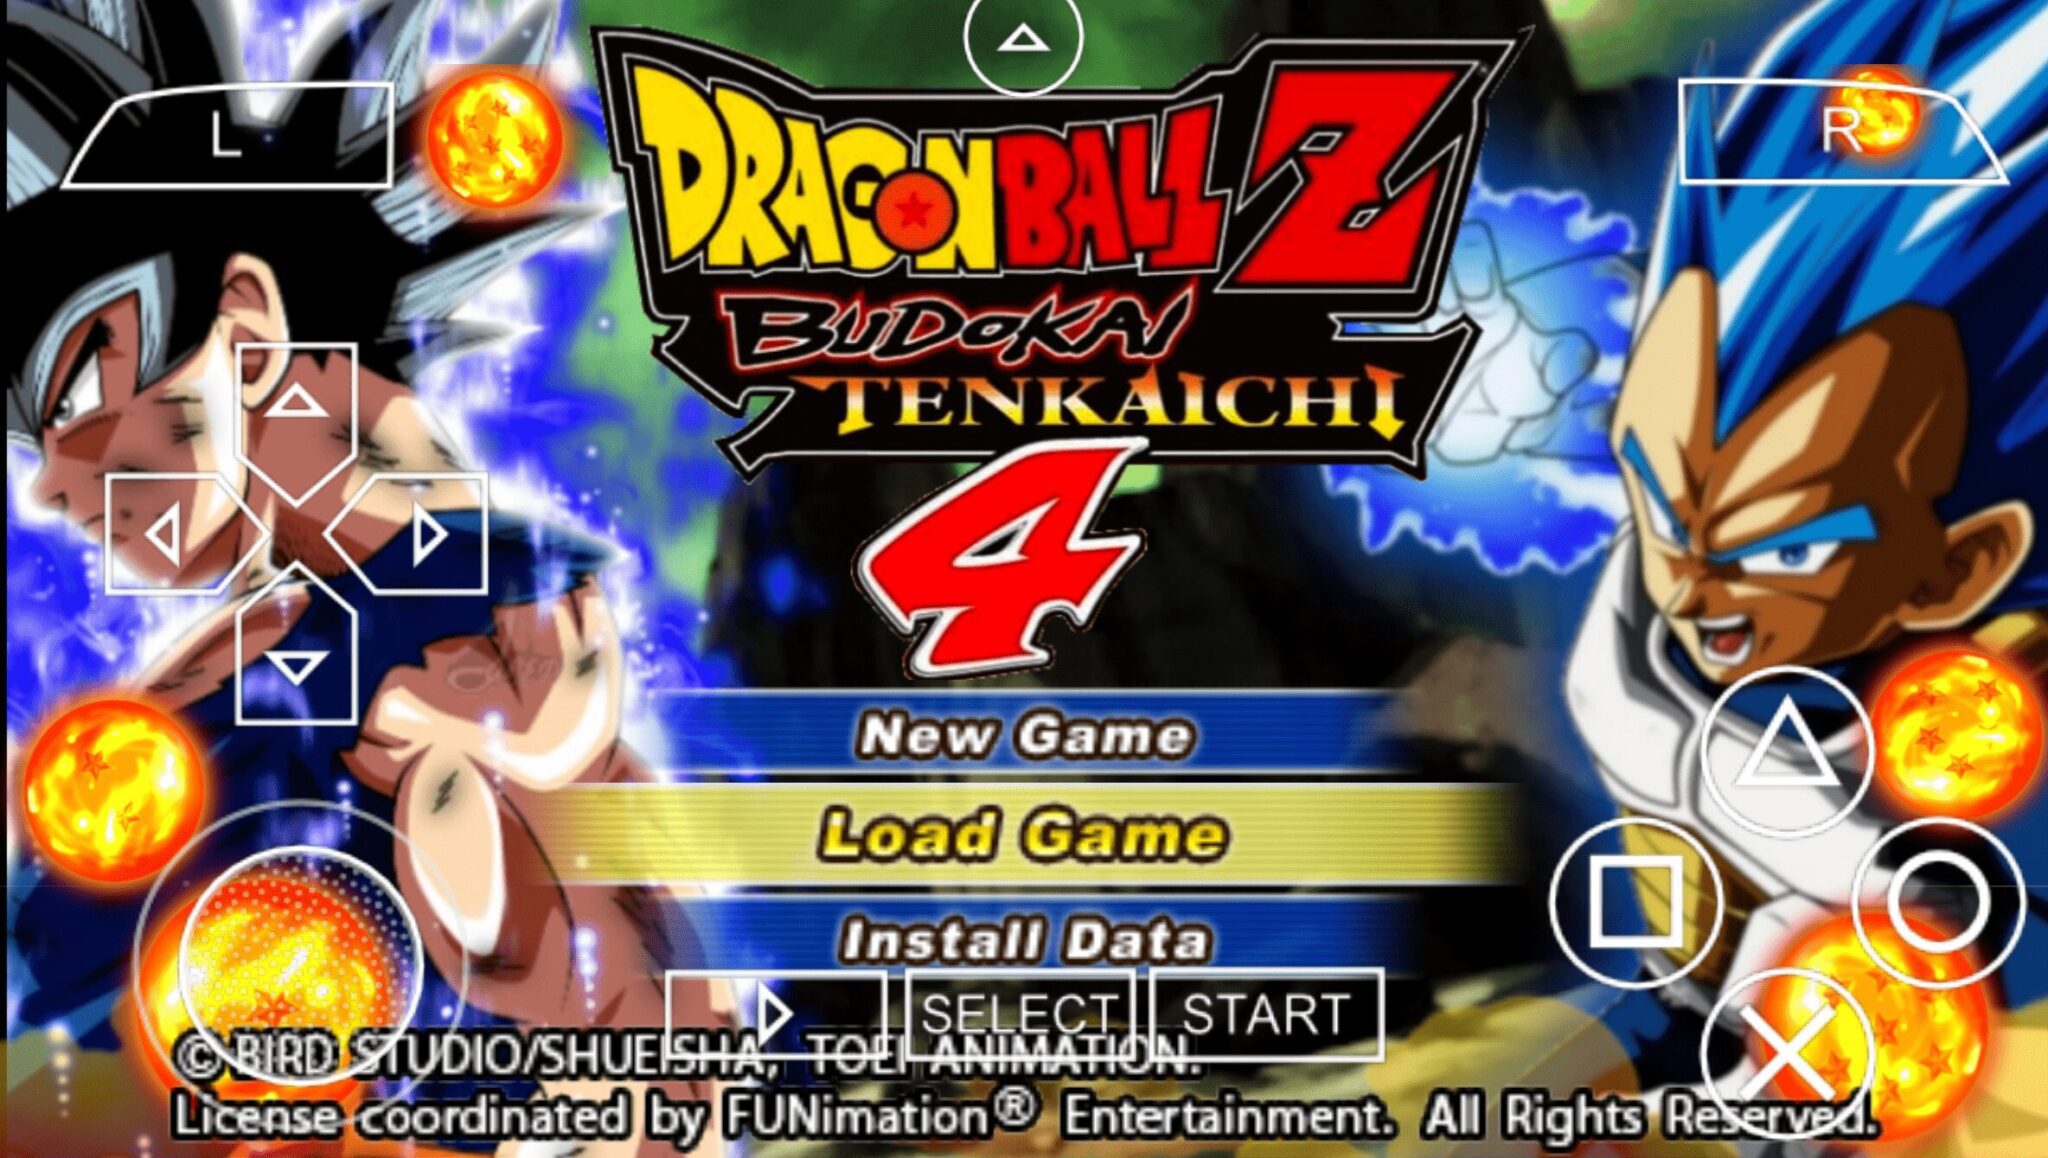 Quick Looks: Dragon Ball Z Budokai Tenkaichi 4 — Gametrog